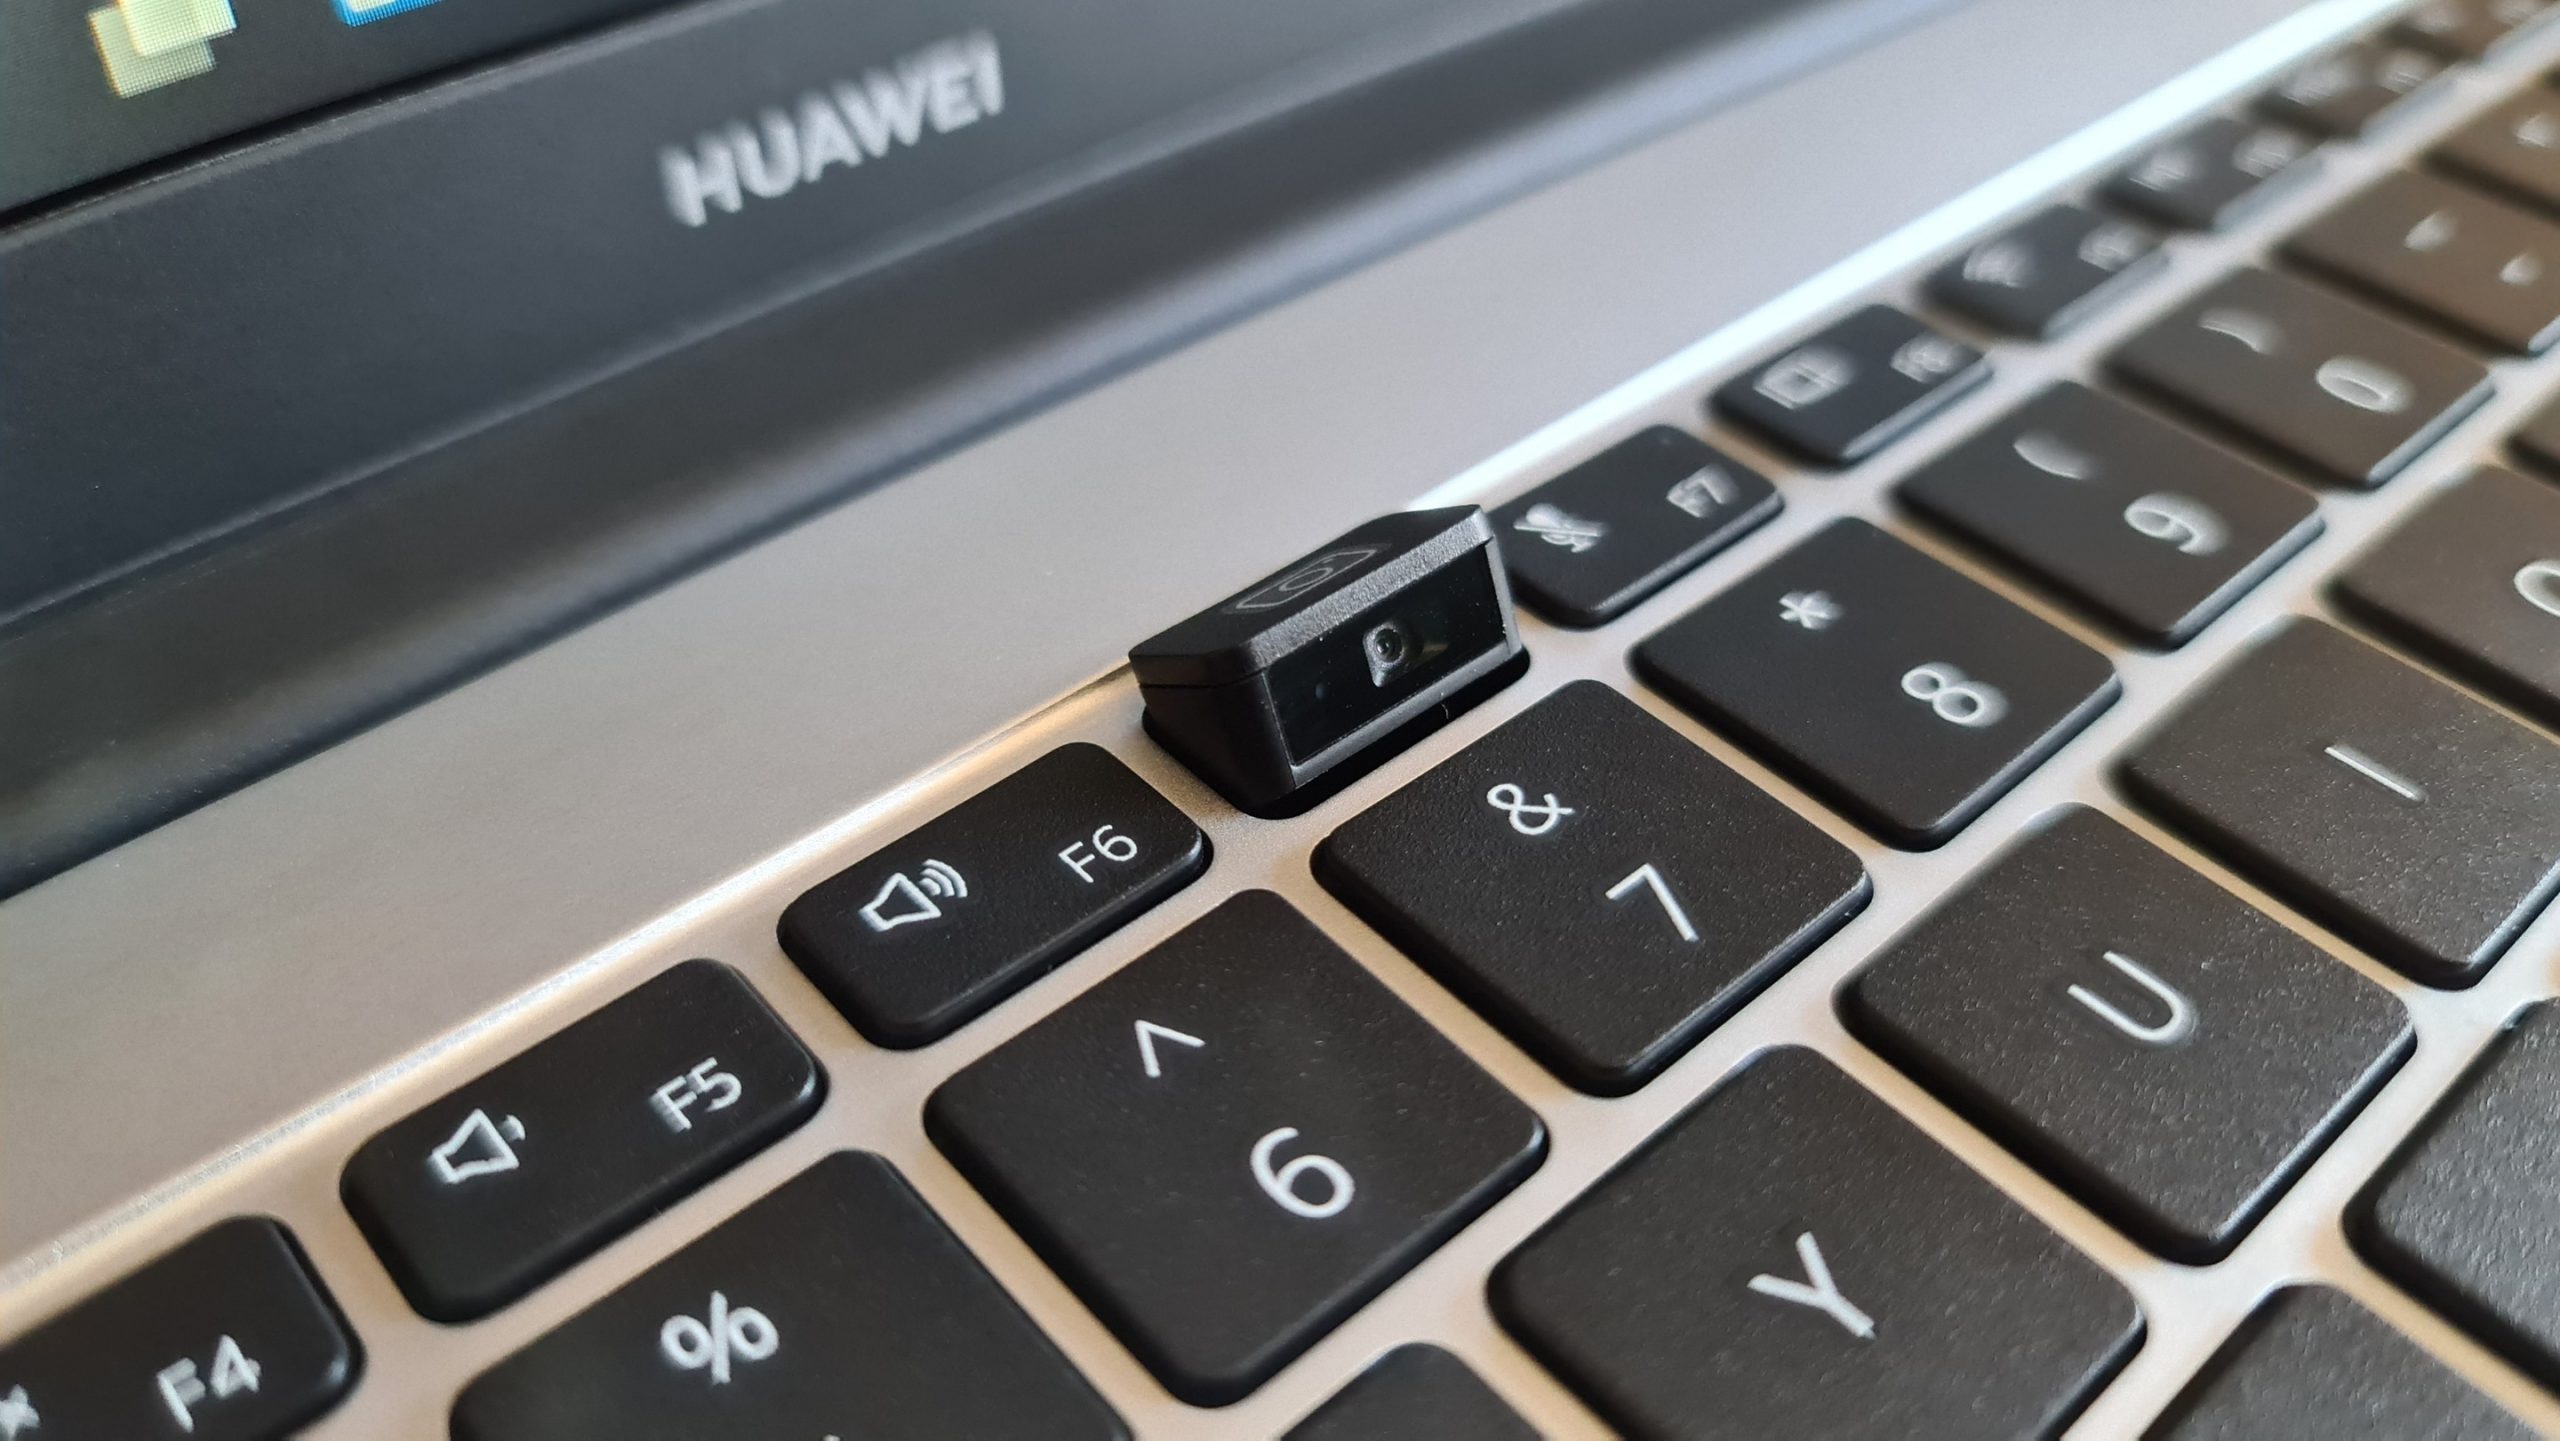 2021 HUAWEI MateBook D 15 Laptops : A Quick Preview!